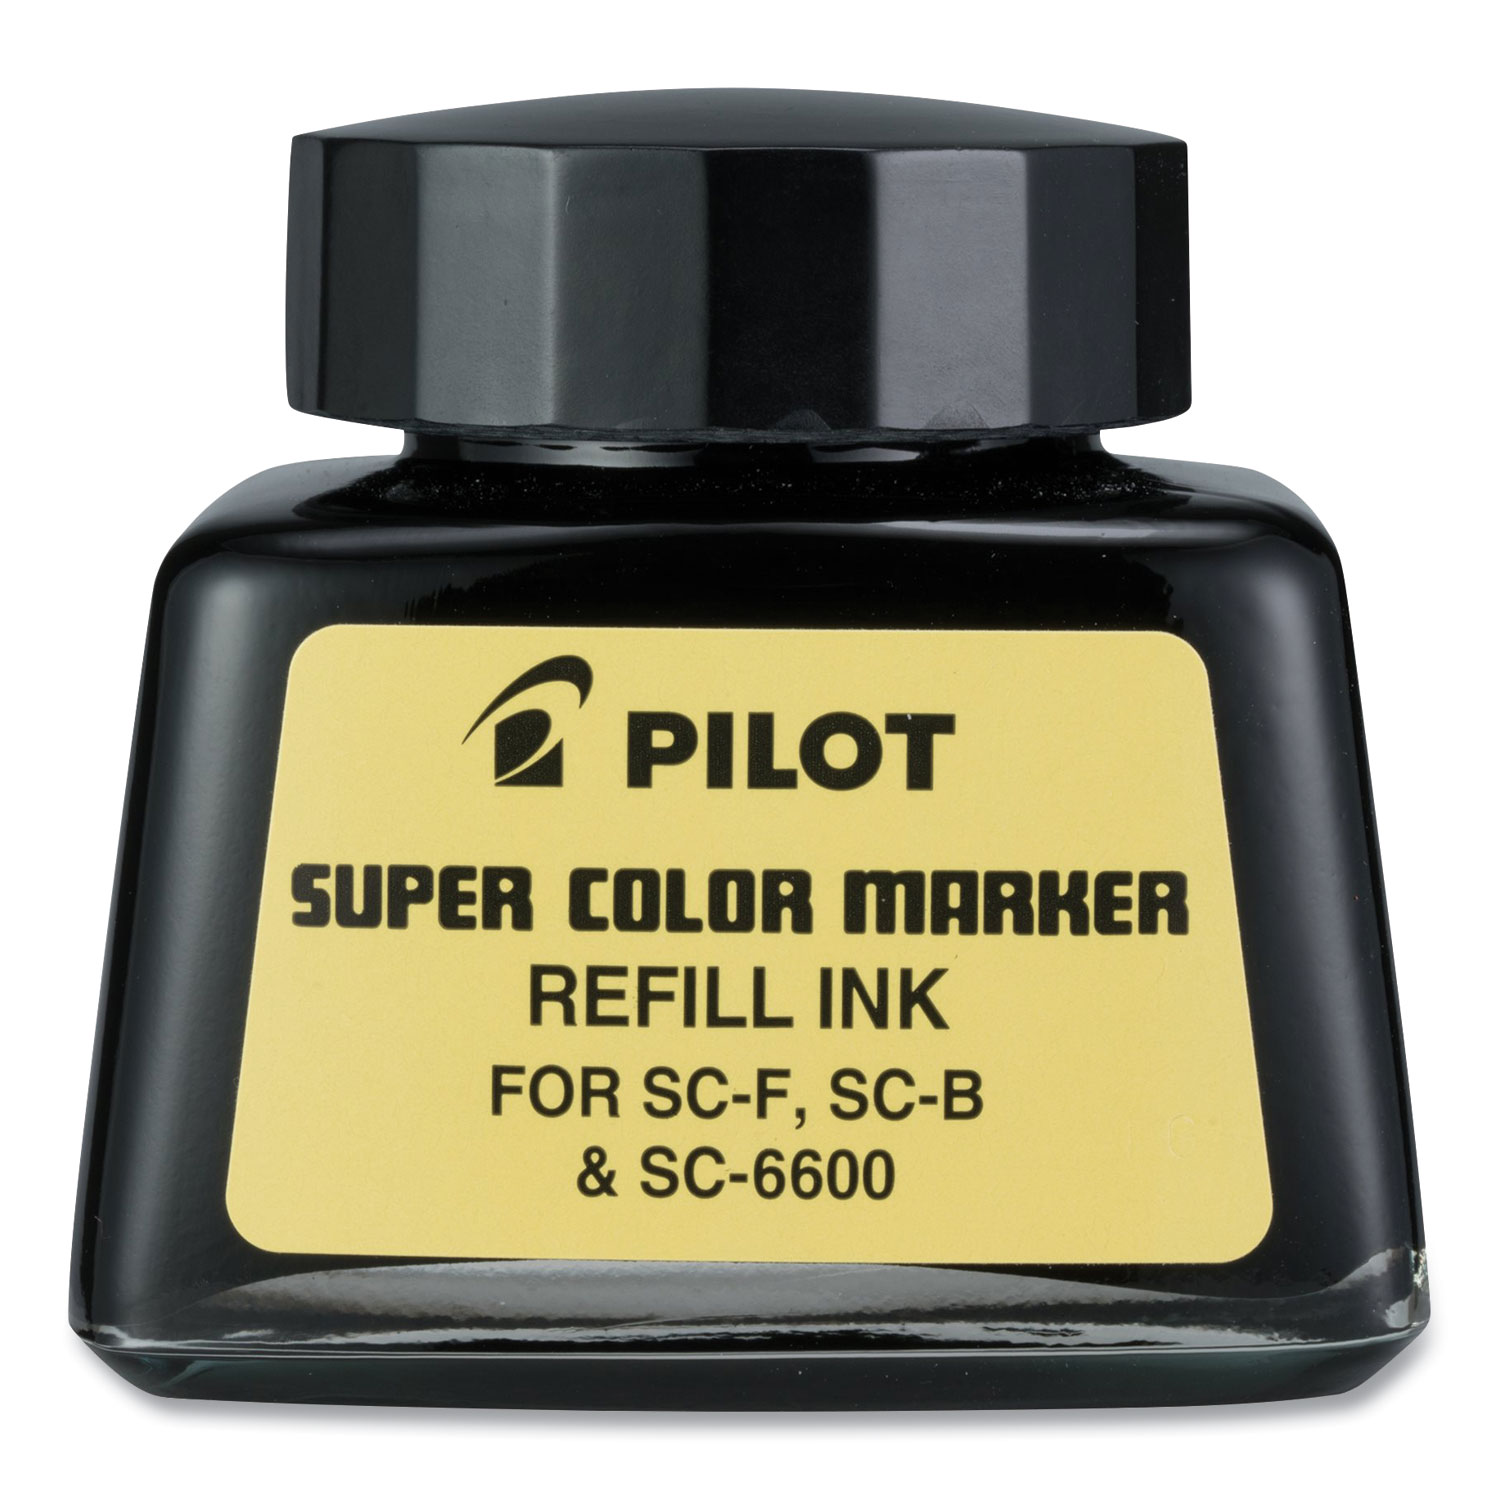  Pilot PIL43500 Super Color Marker Refill Ink, 30 mL Bottle, Black (PIL810639) 